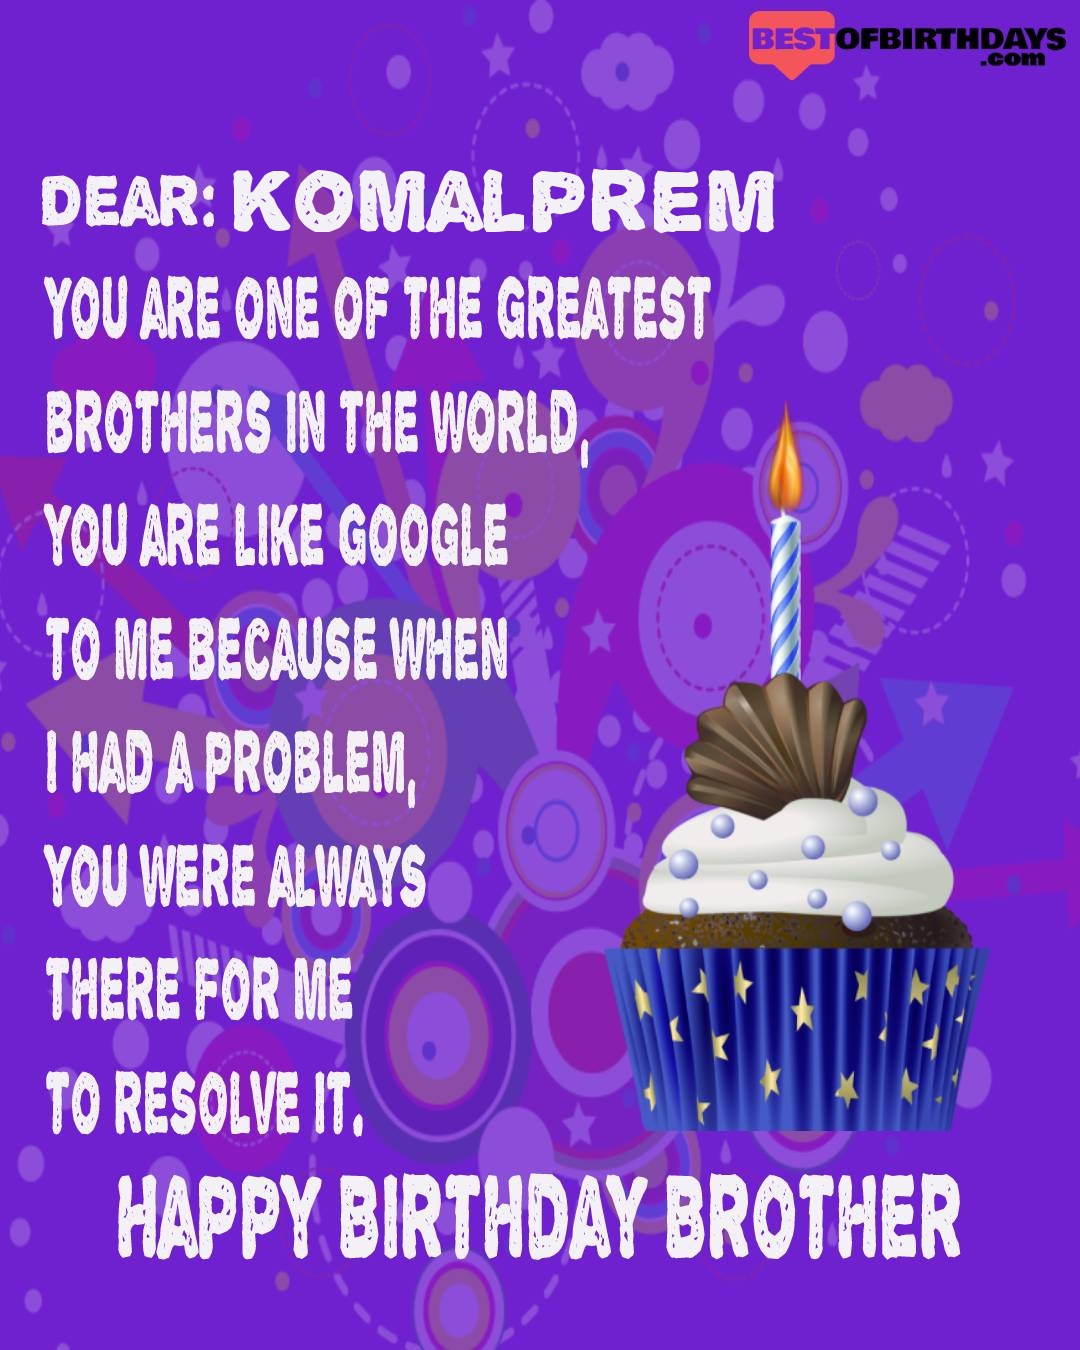 Happy birthday komalprem bhai brother bro